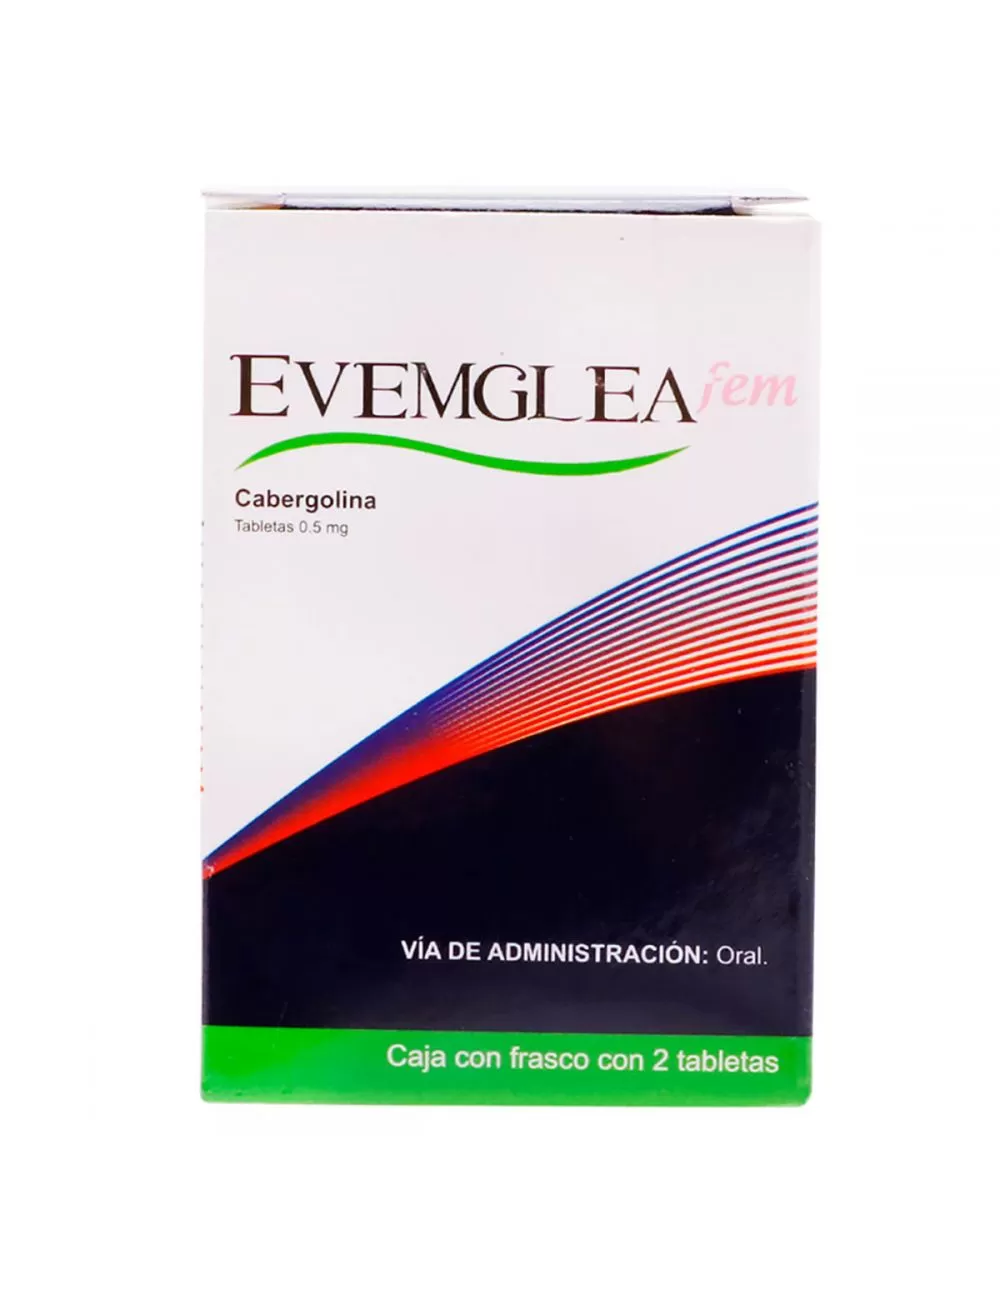 Evemglea Fem 0.5 mg Caja Con Frasco Con 2 Tabletas